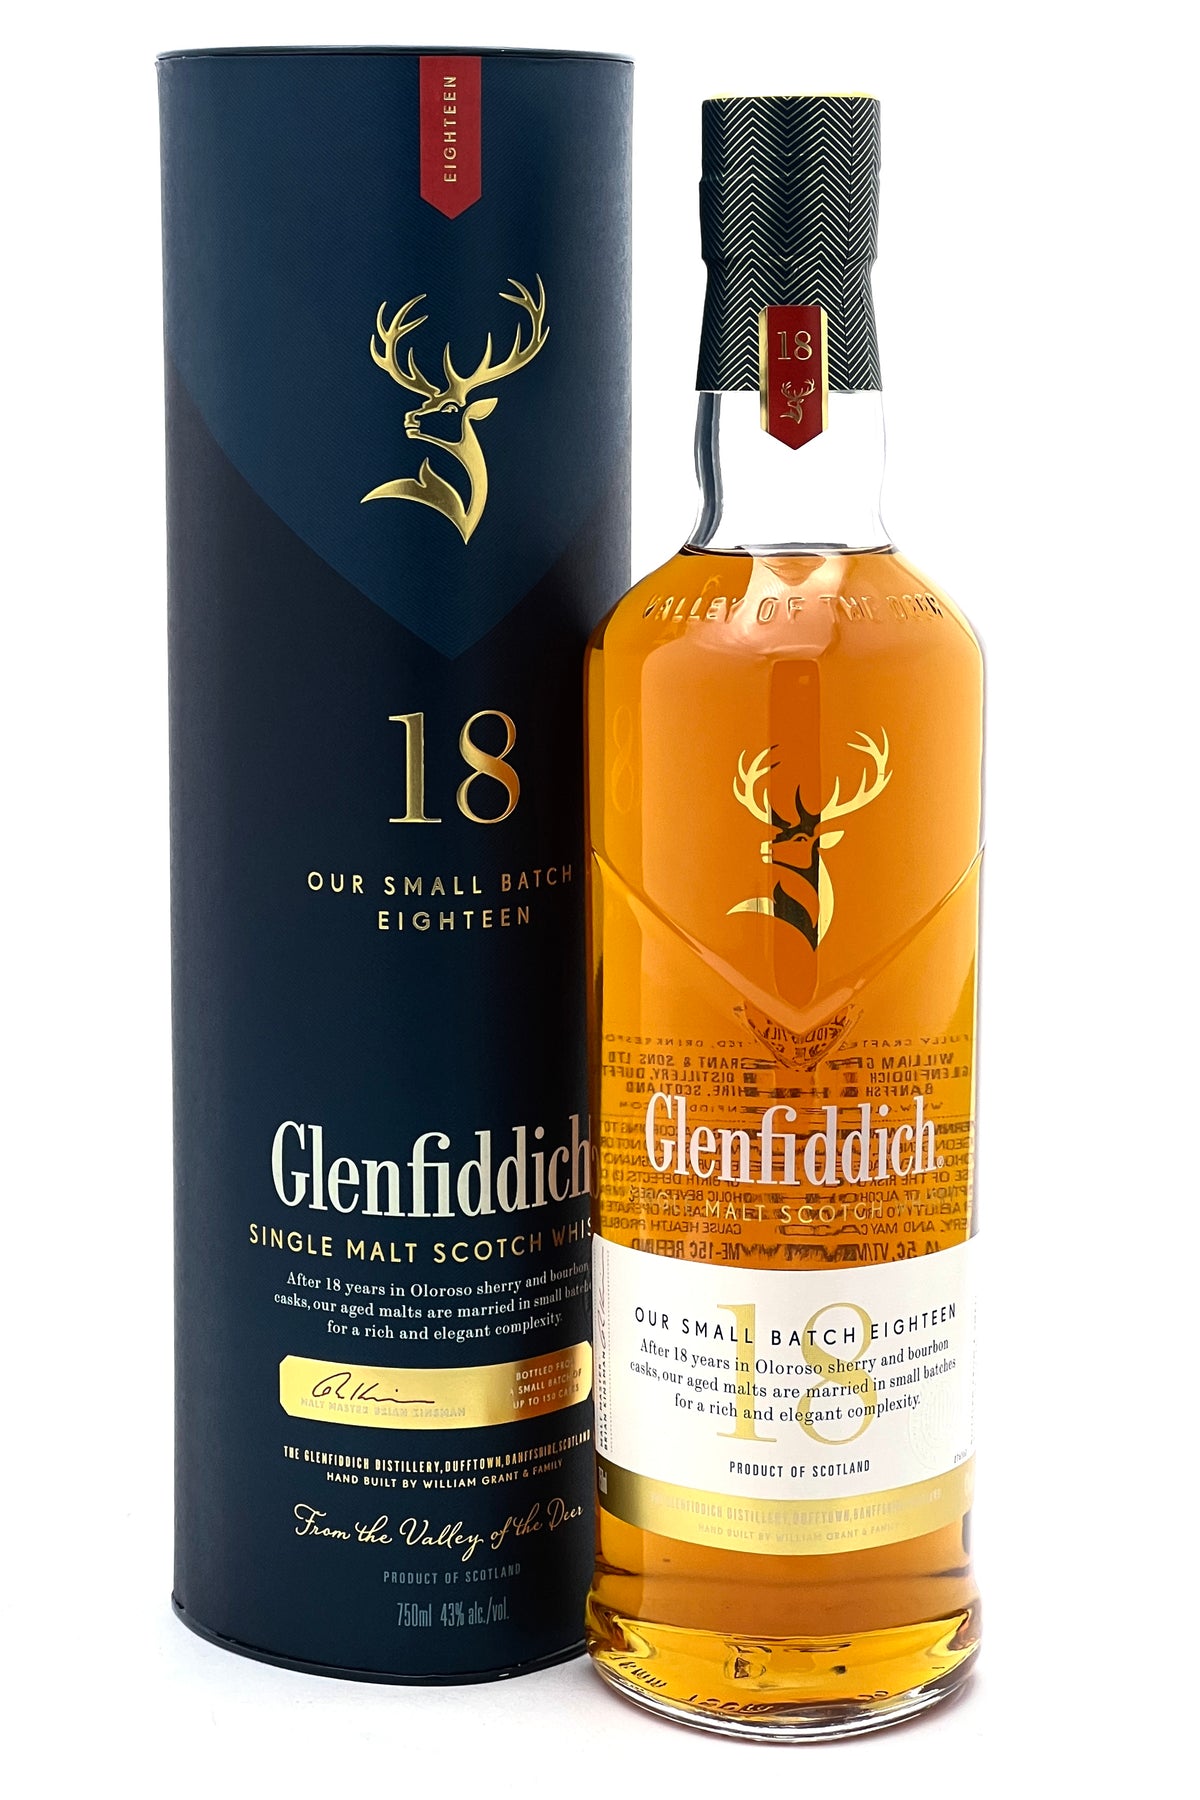 Glenfiddich 18 Year Old Scotch Whisky